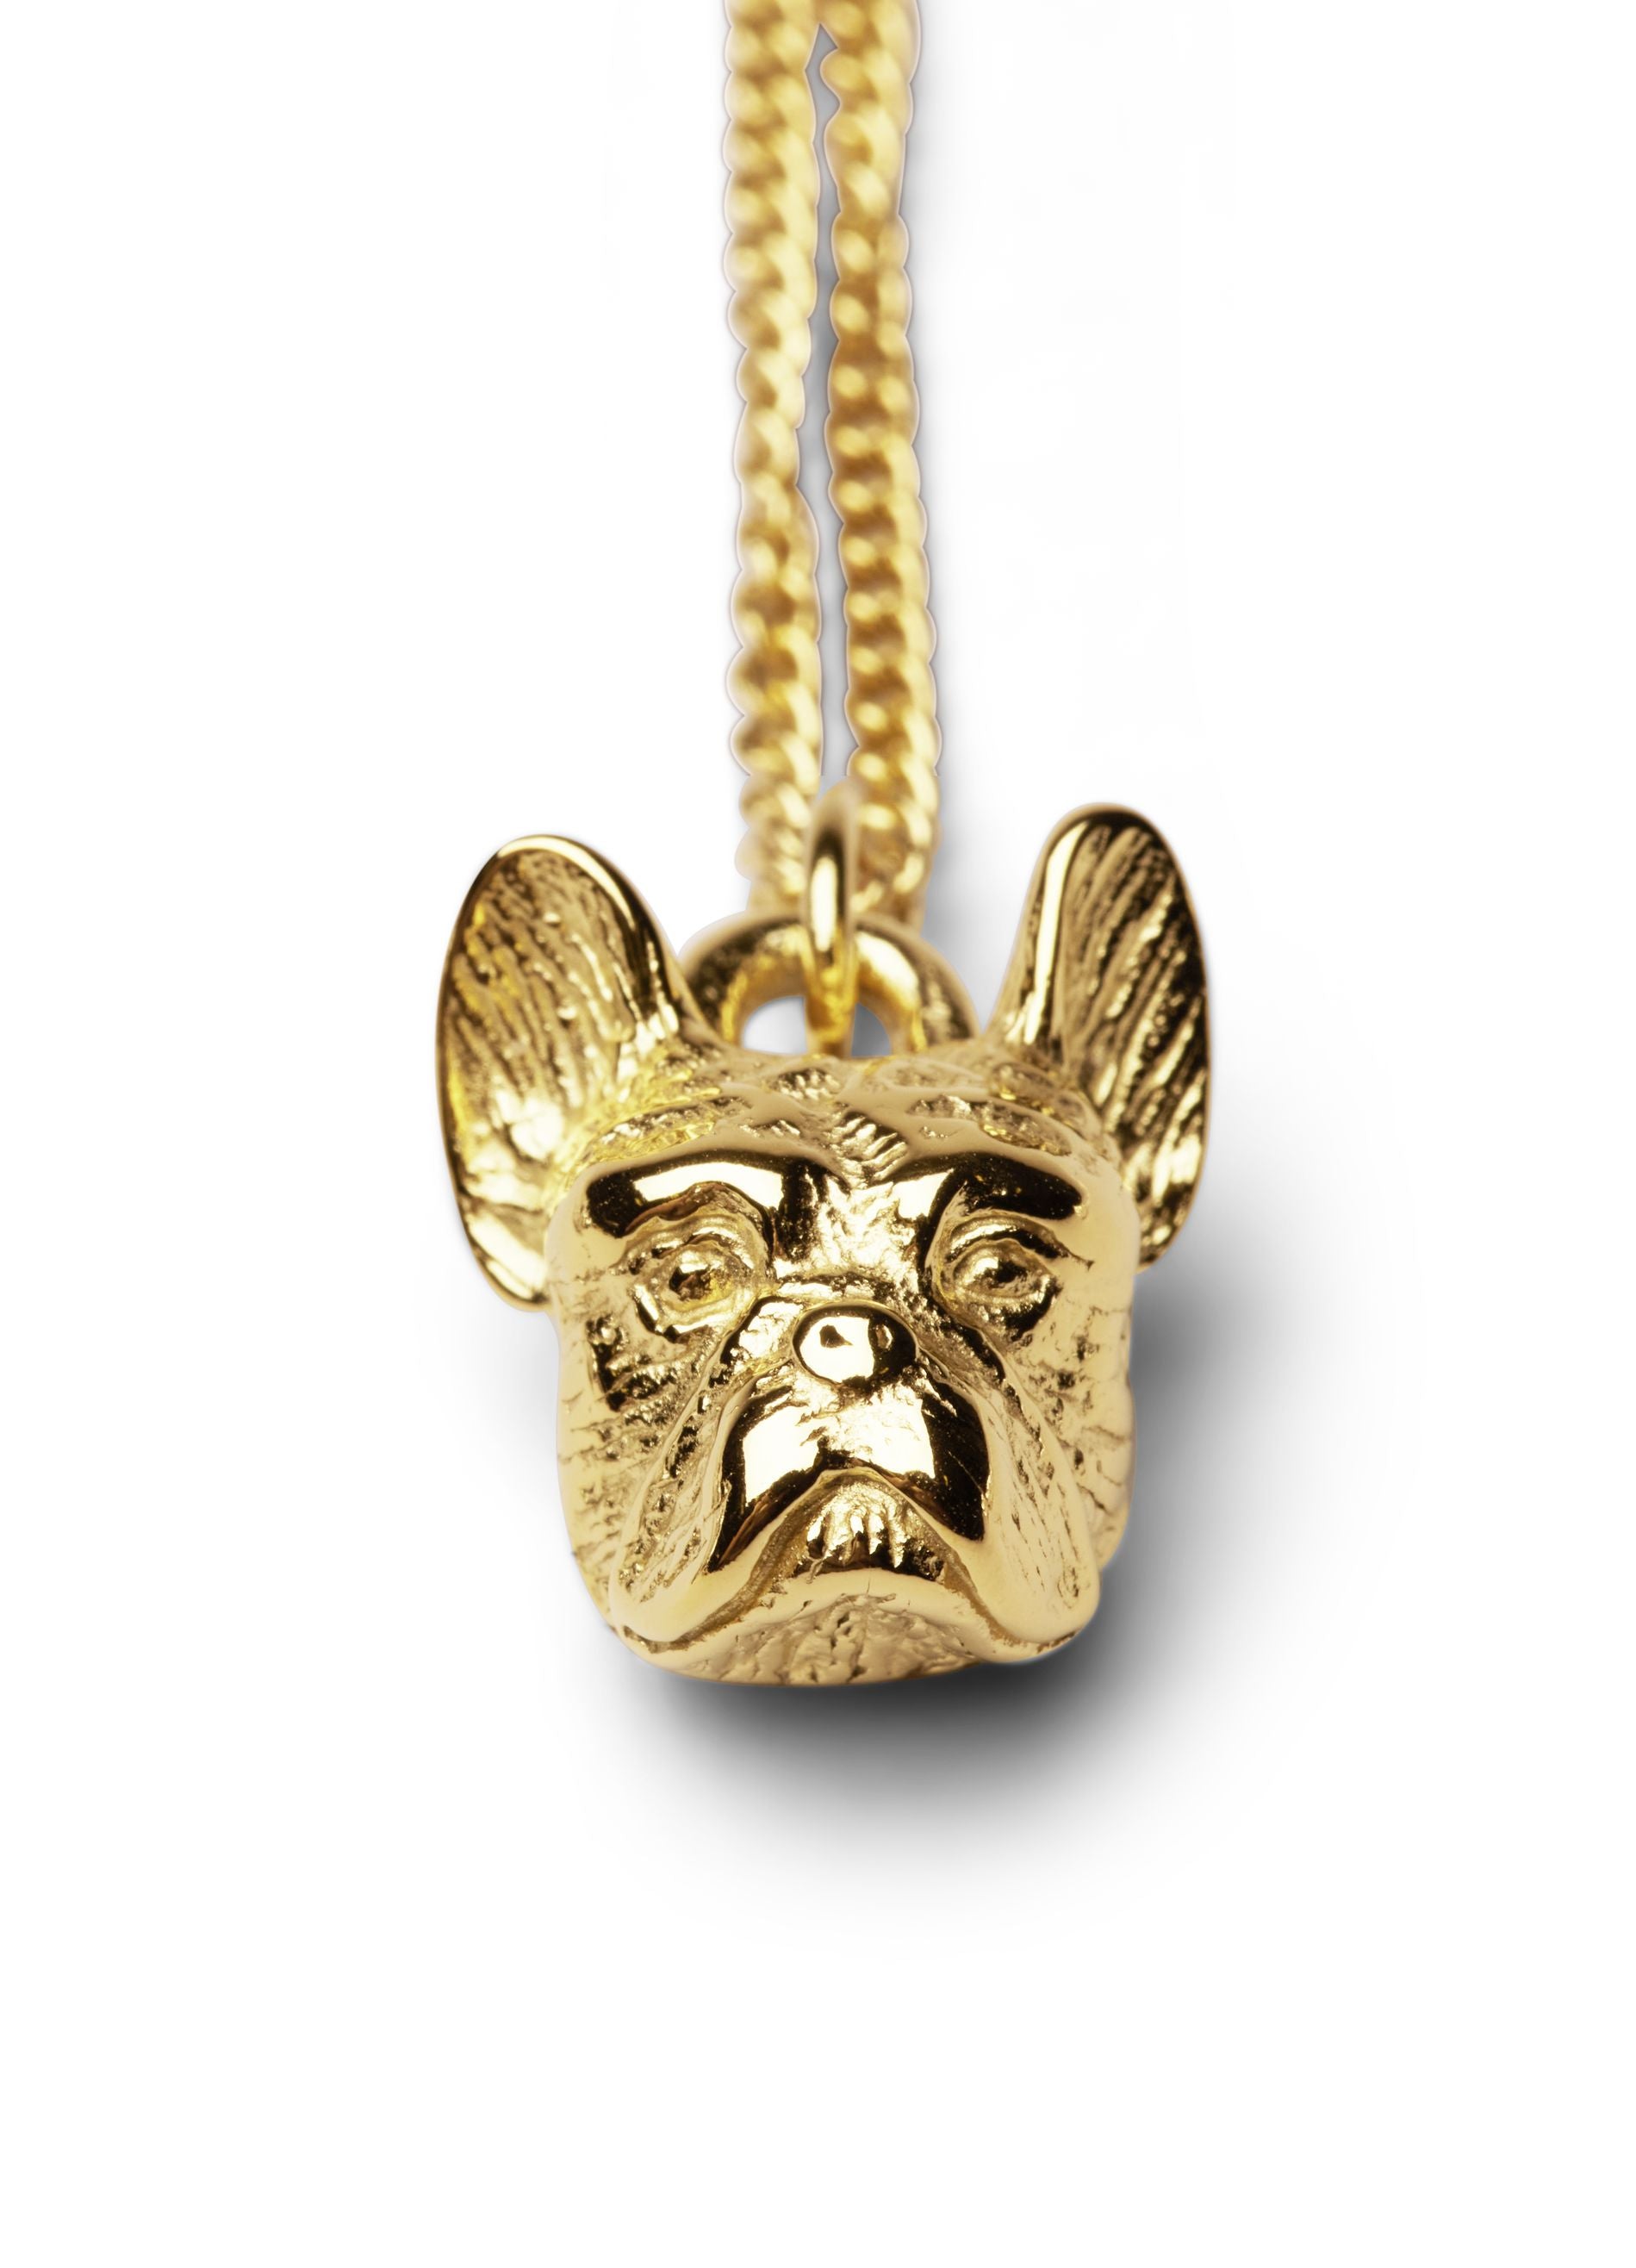 Skultuna French Bulldog Necklace, Gold Plated